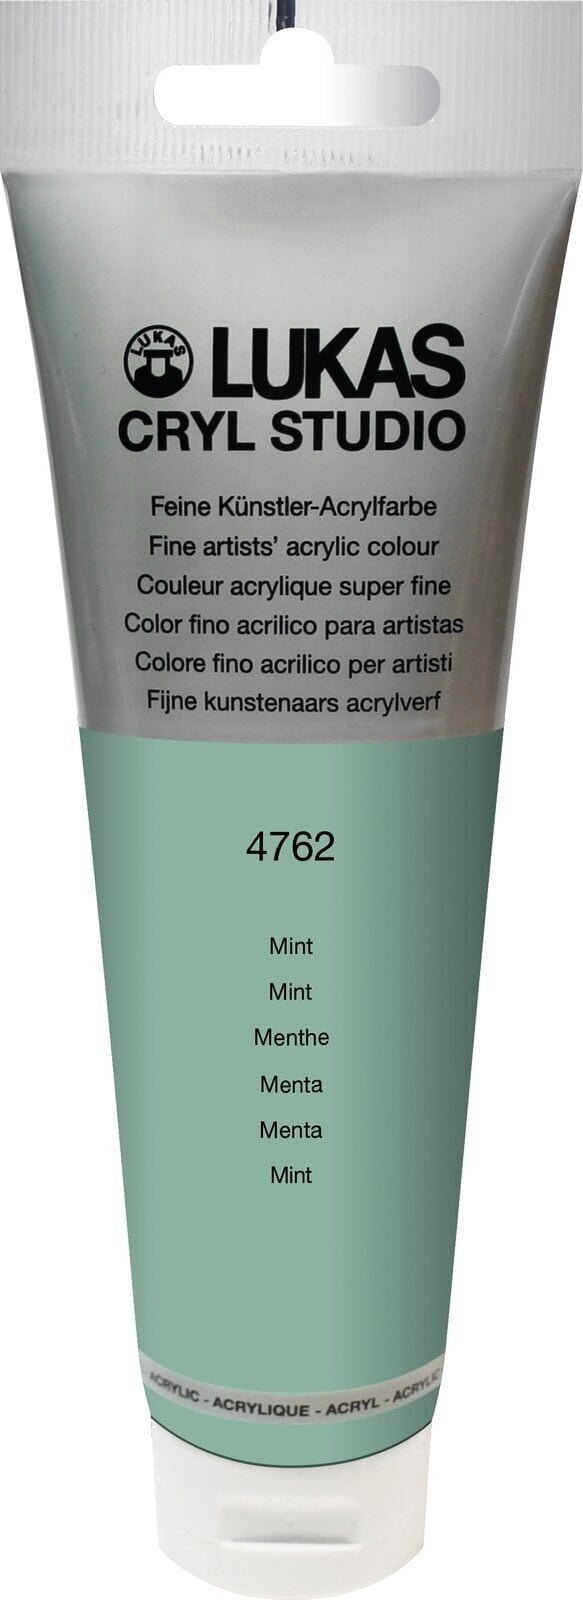 Acrylic Paint Lukas Cryl Studio Acrylic Paint Plastic Tube Acrylic Paint Mint 125 ml 1 pc